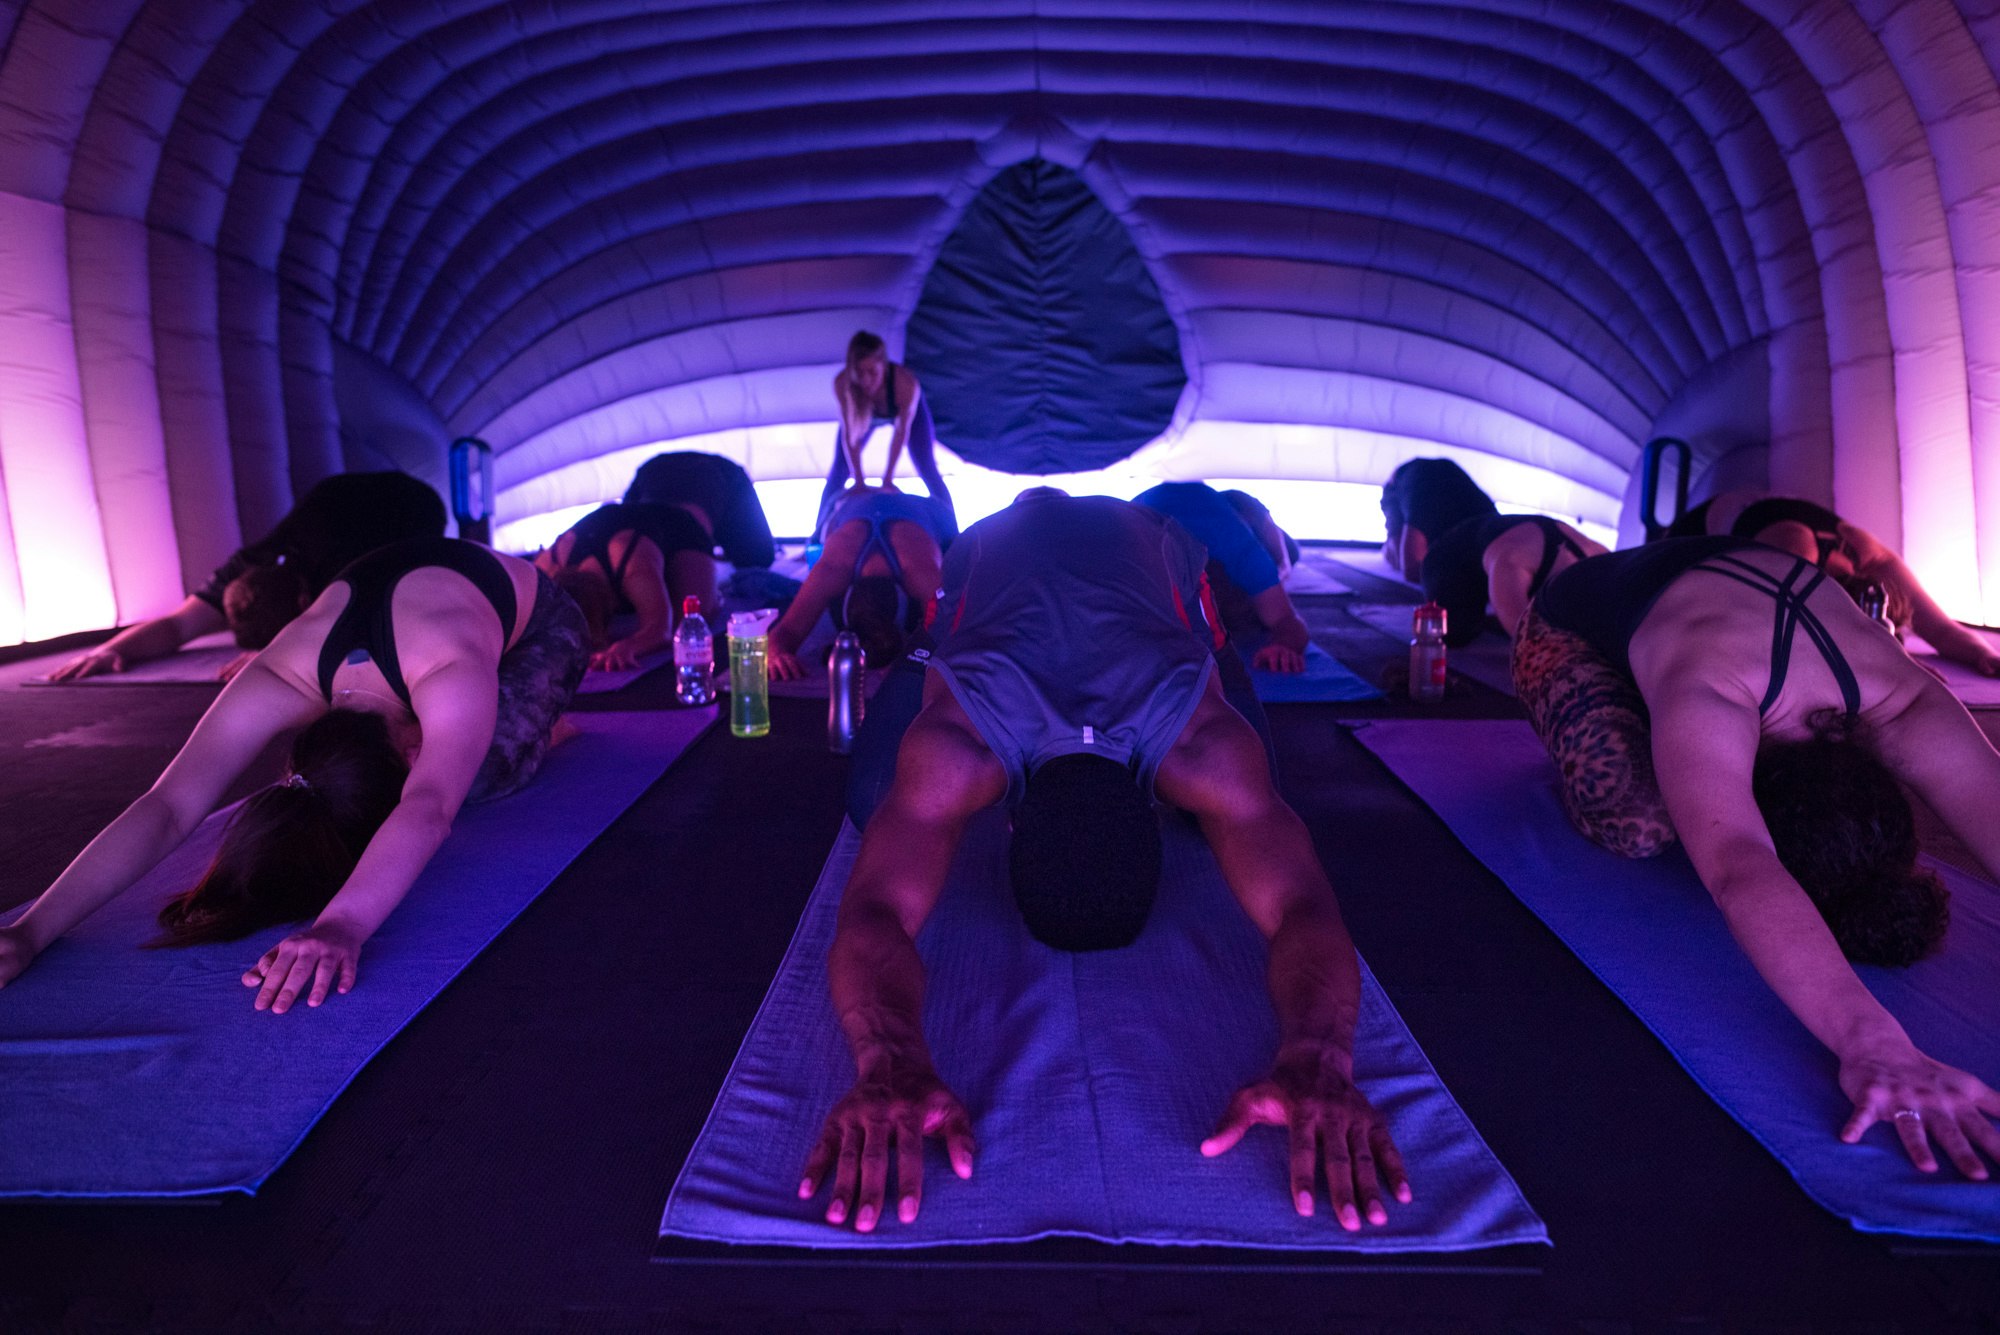 Blow up Bikram yoga goes global